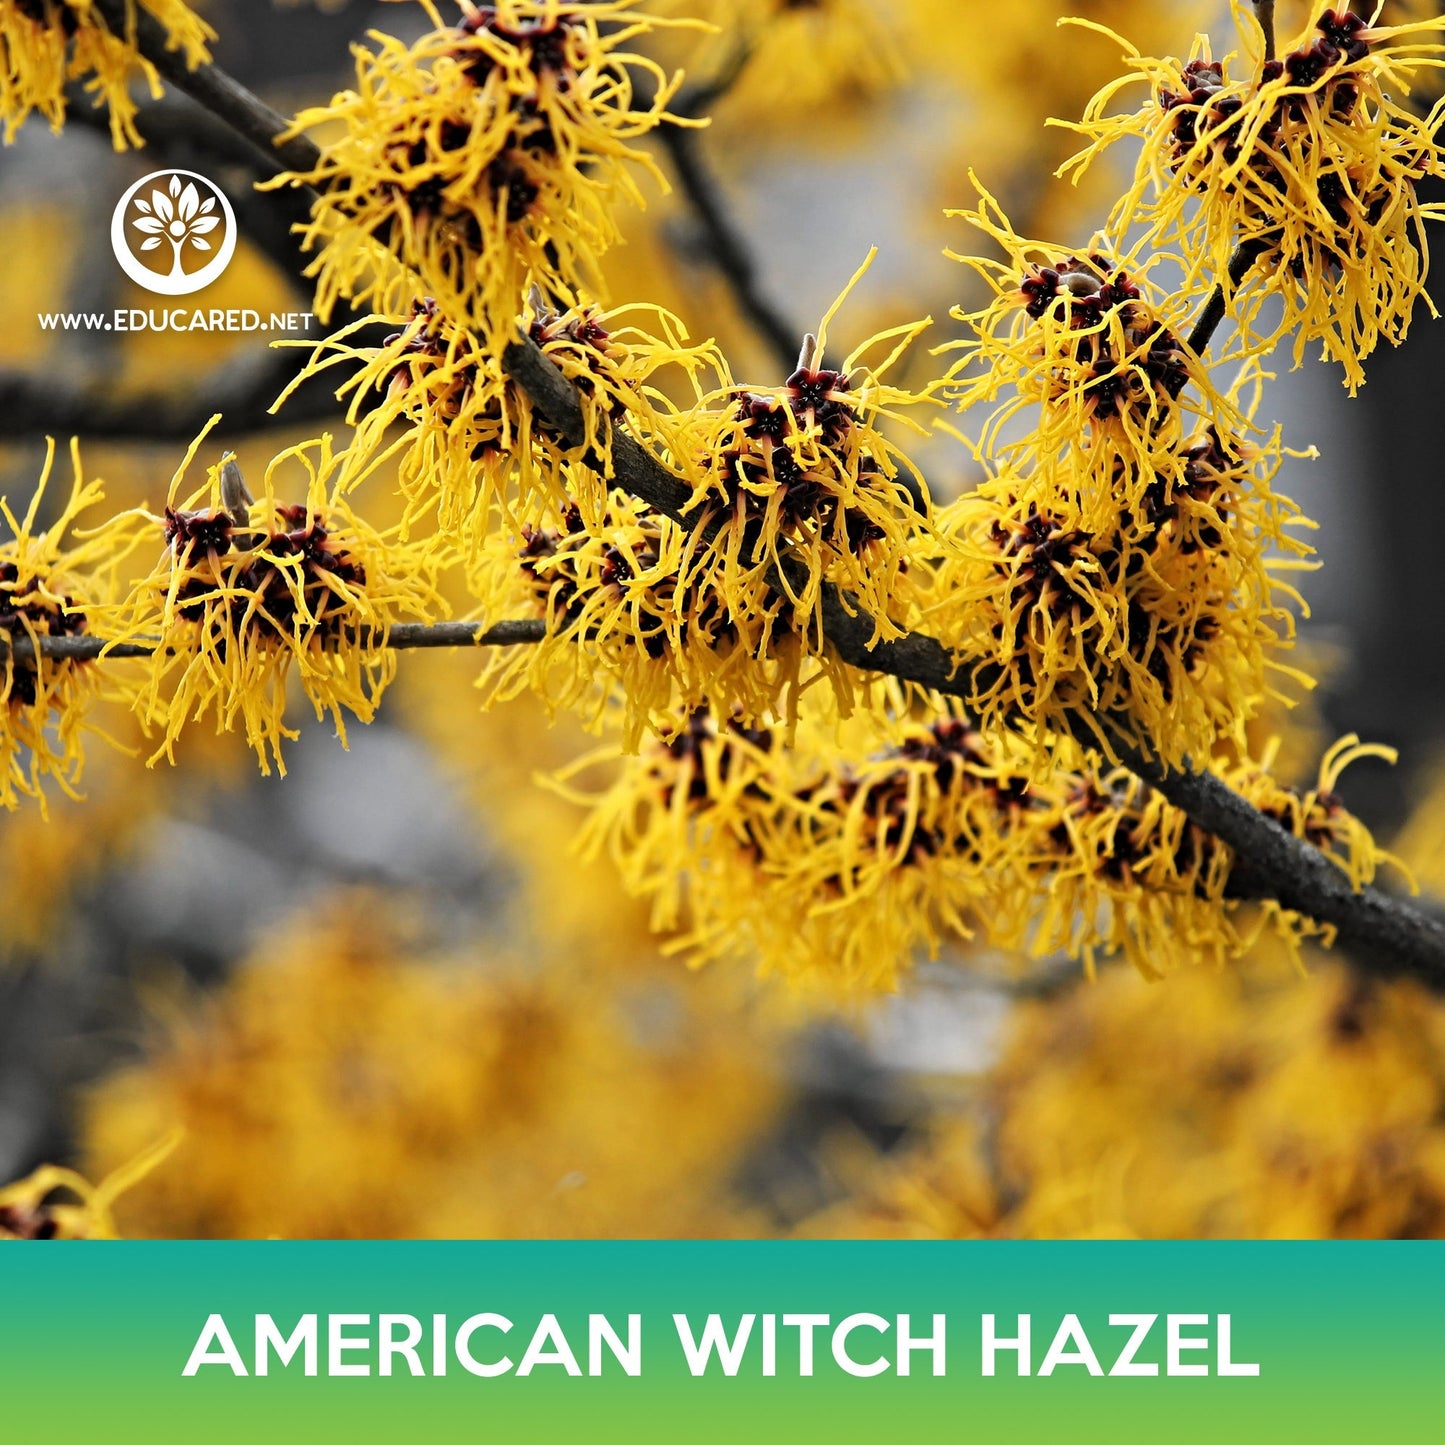 American Witch Hazel Tree Seeds, Hamamelis virginiana, Fragrant yellow Bloom Tree